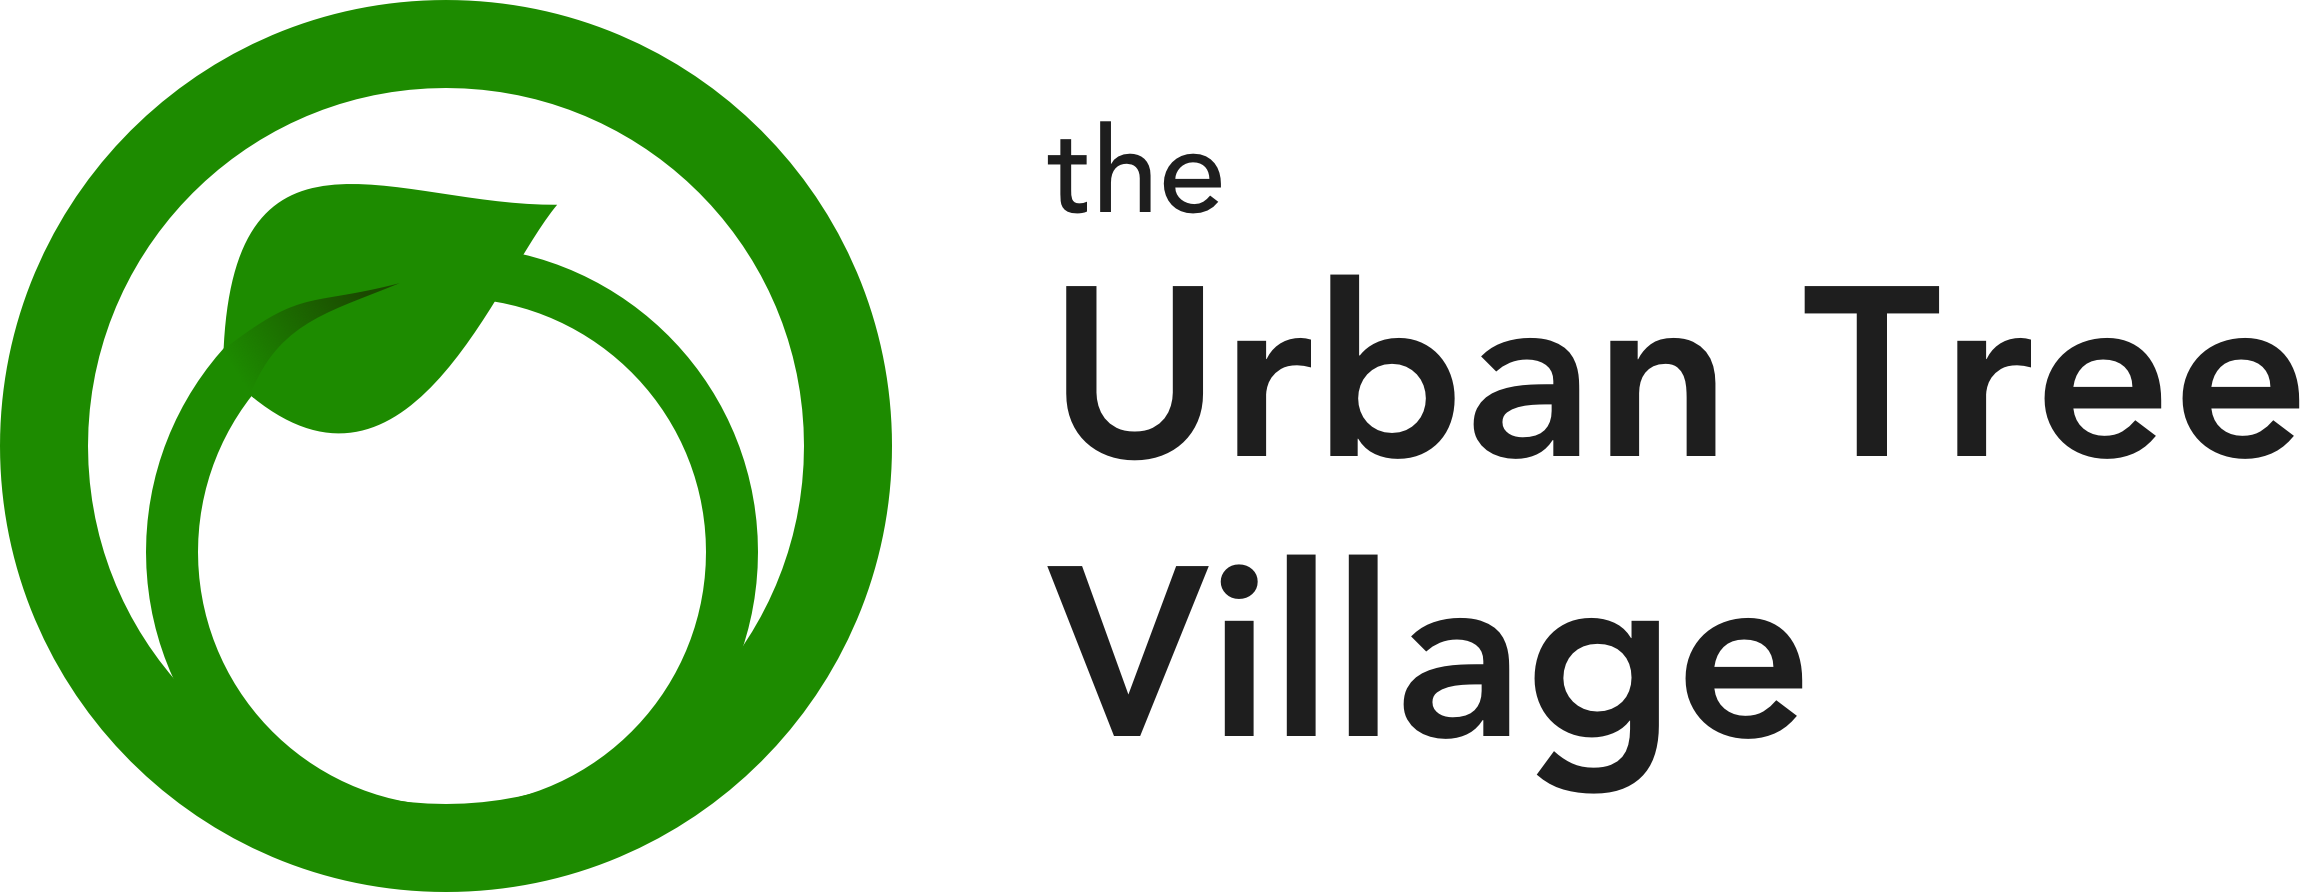 The Urban Tree Village